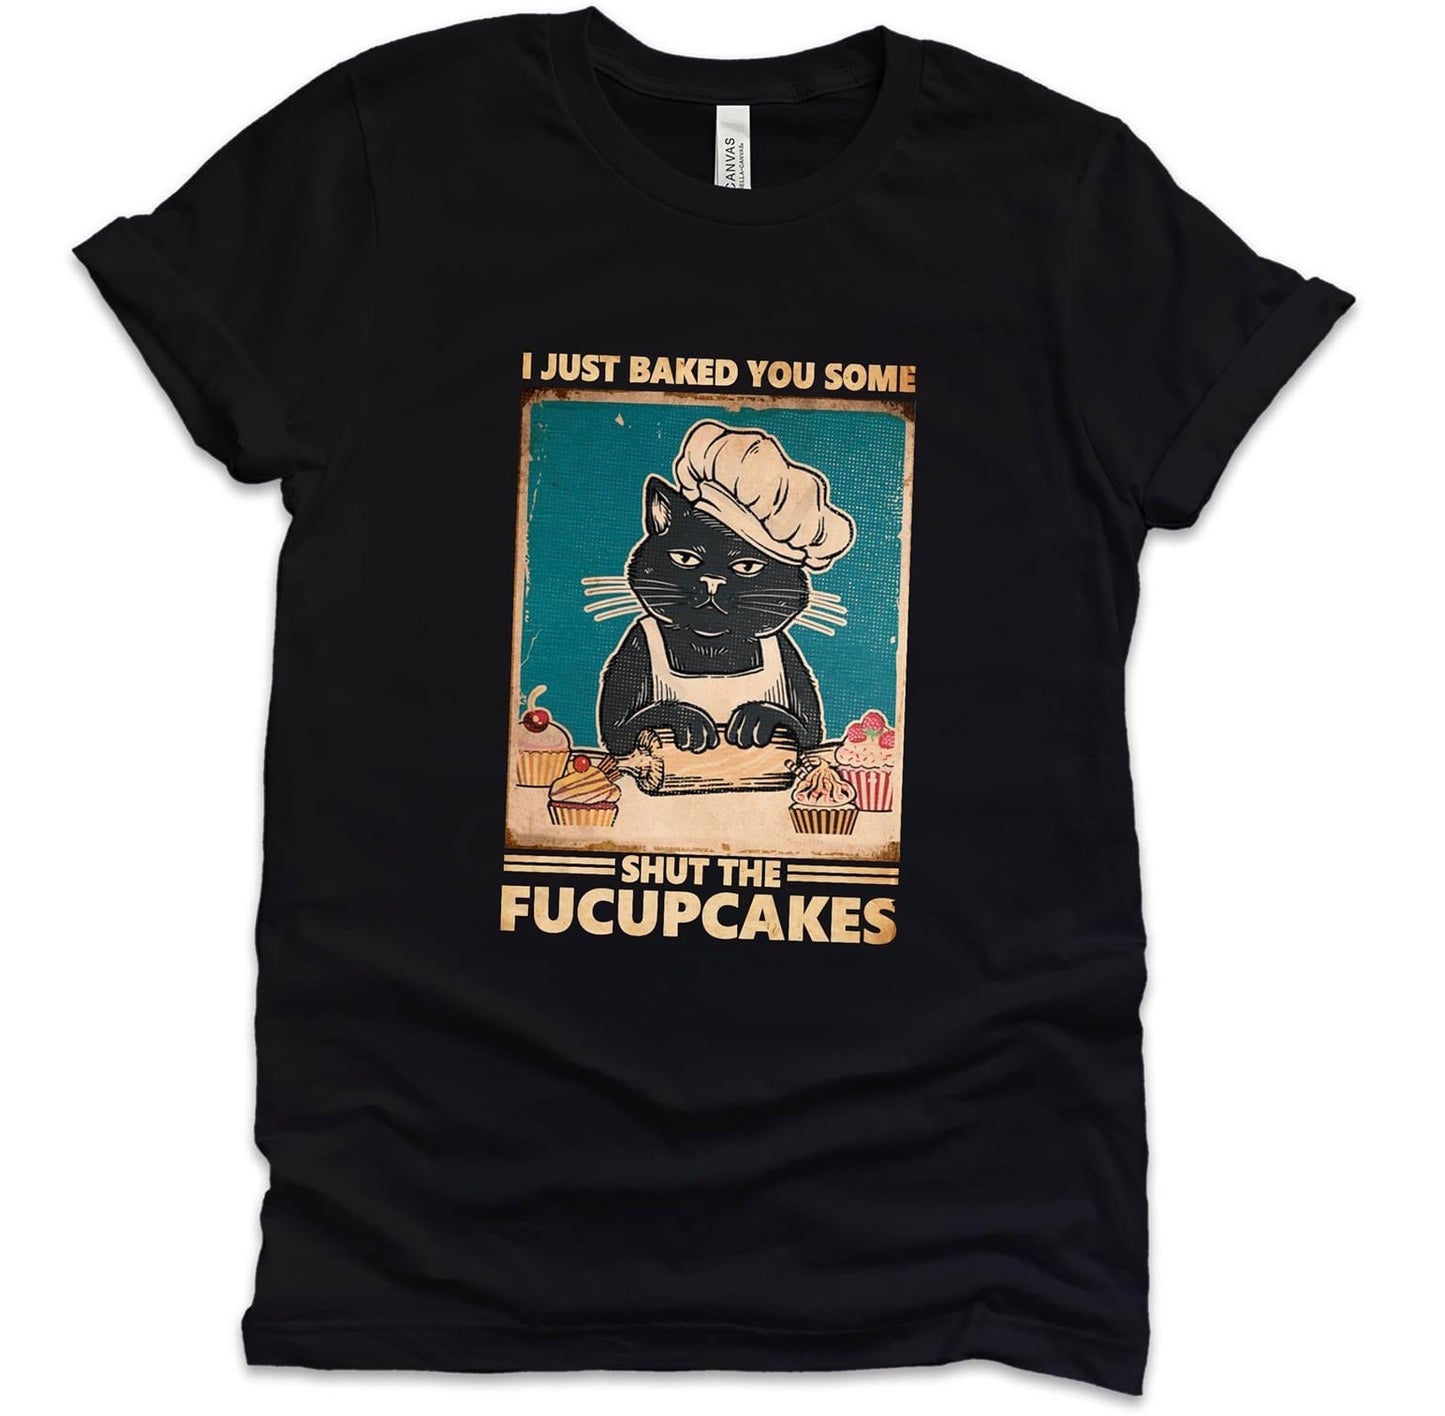 Fucupcakes Adult Unisex Shirt - Bella Lia Boutique